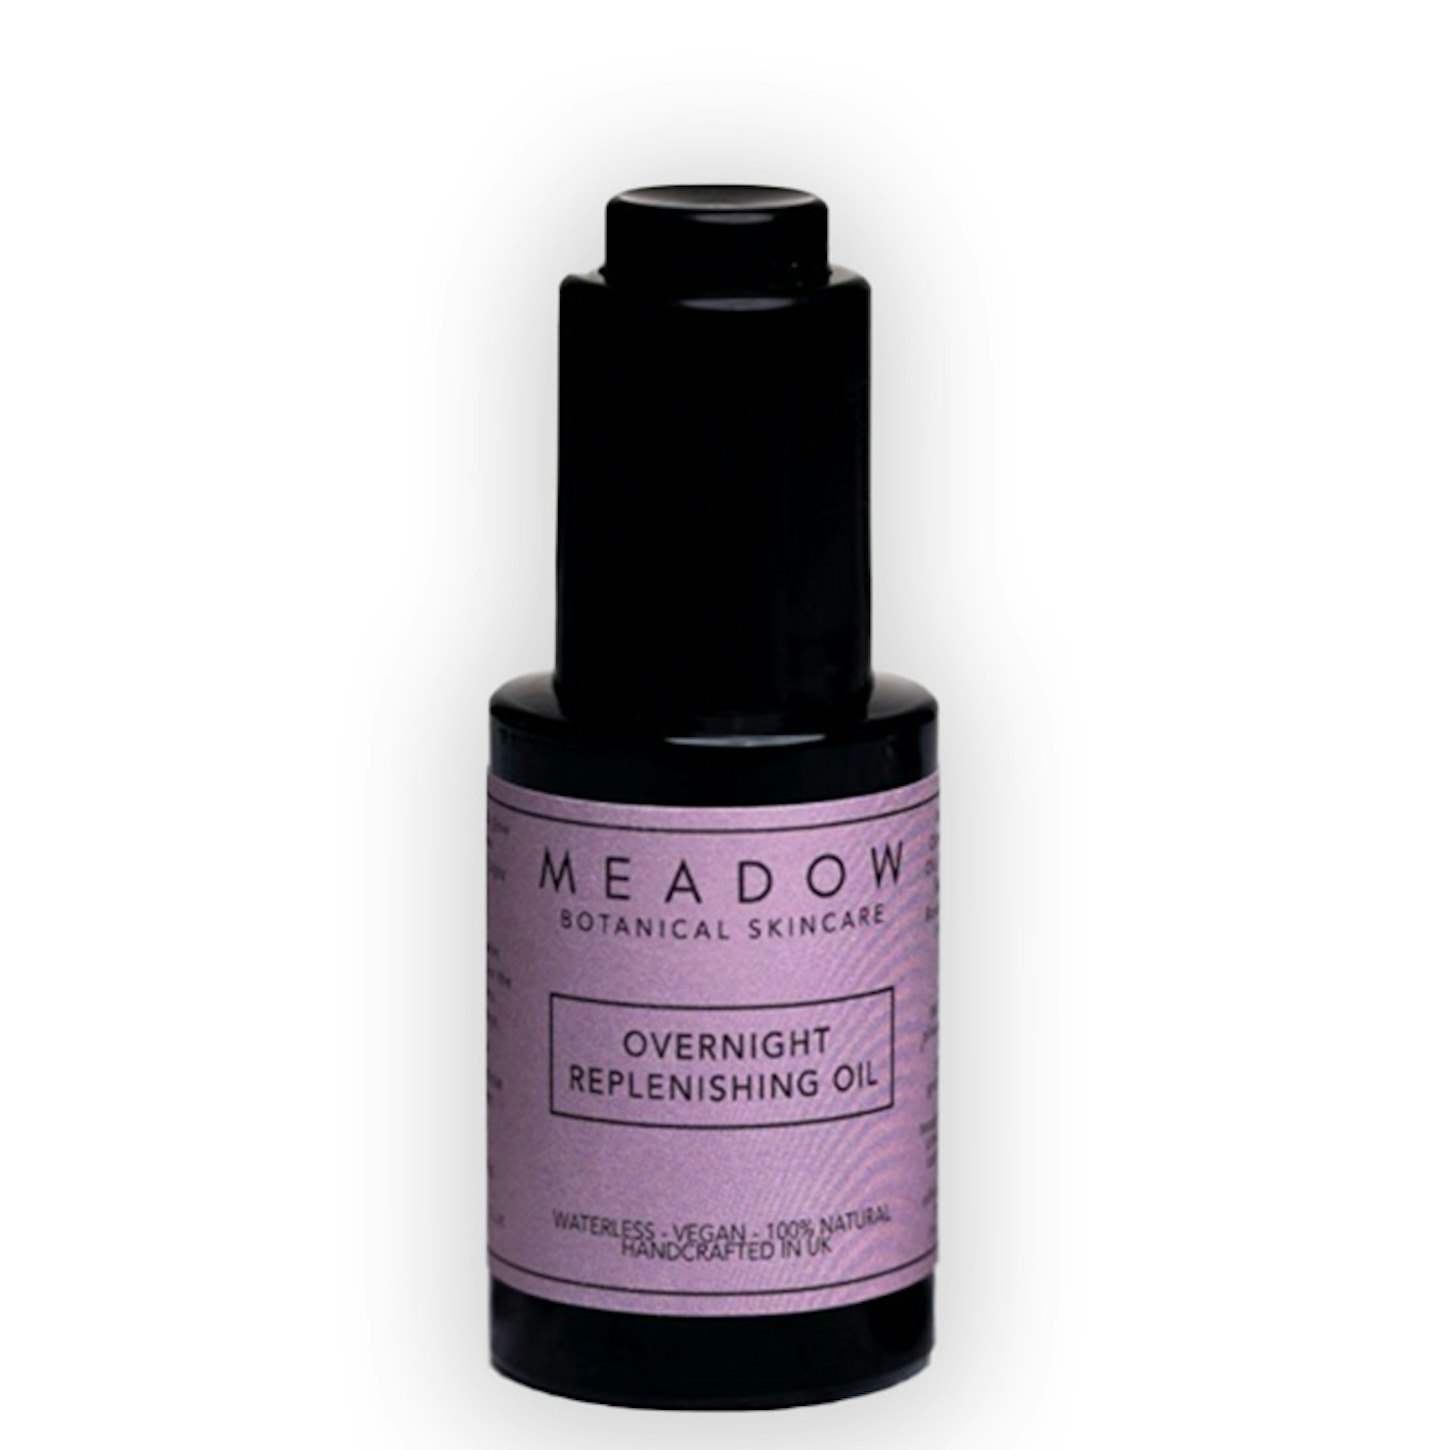 Meadow Skin Care overnight replenishing oil